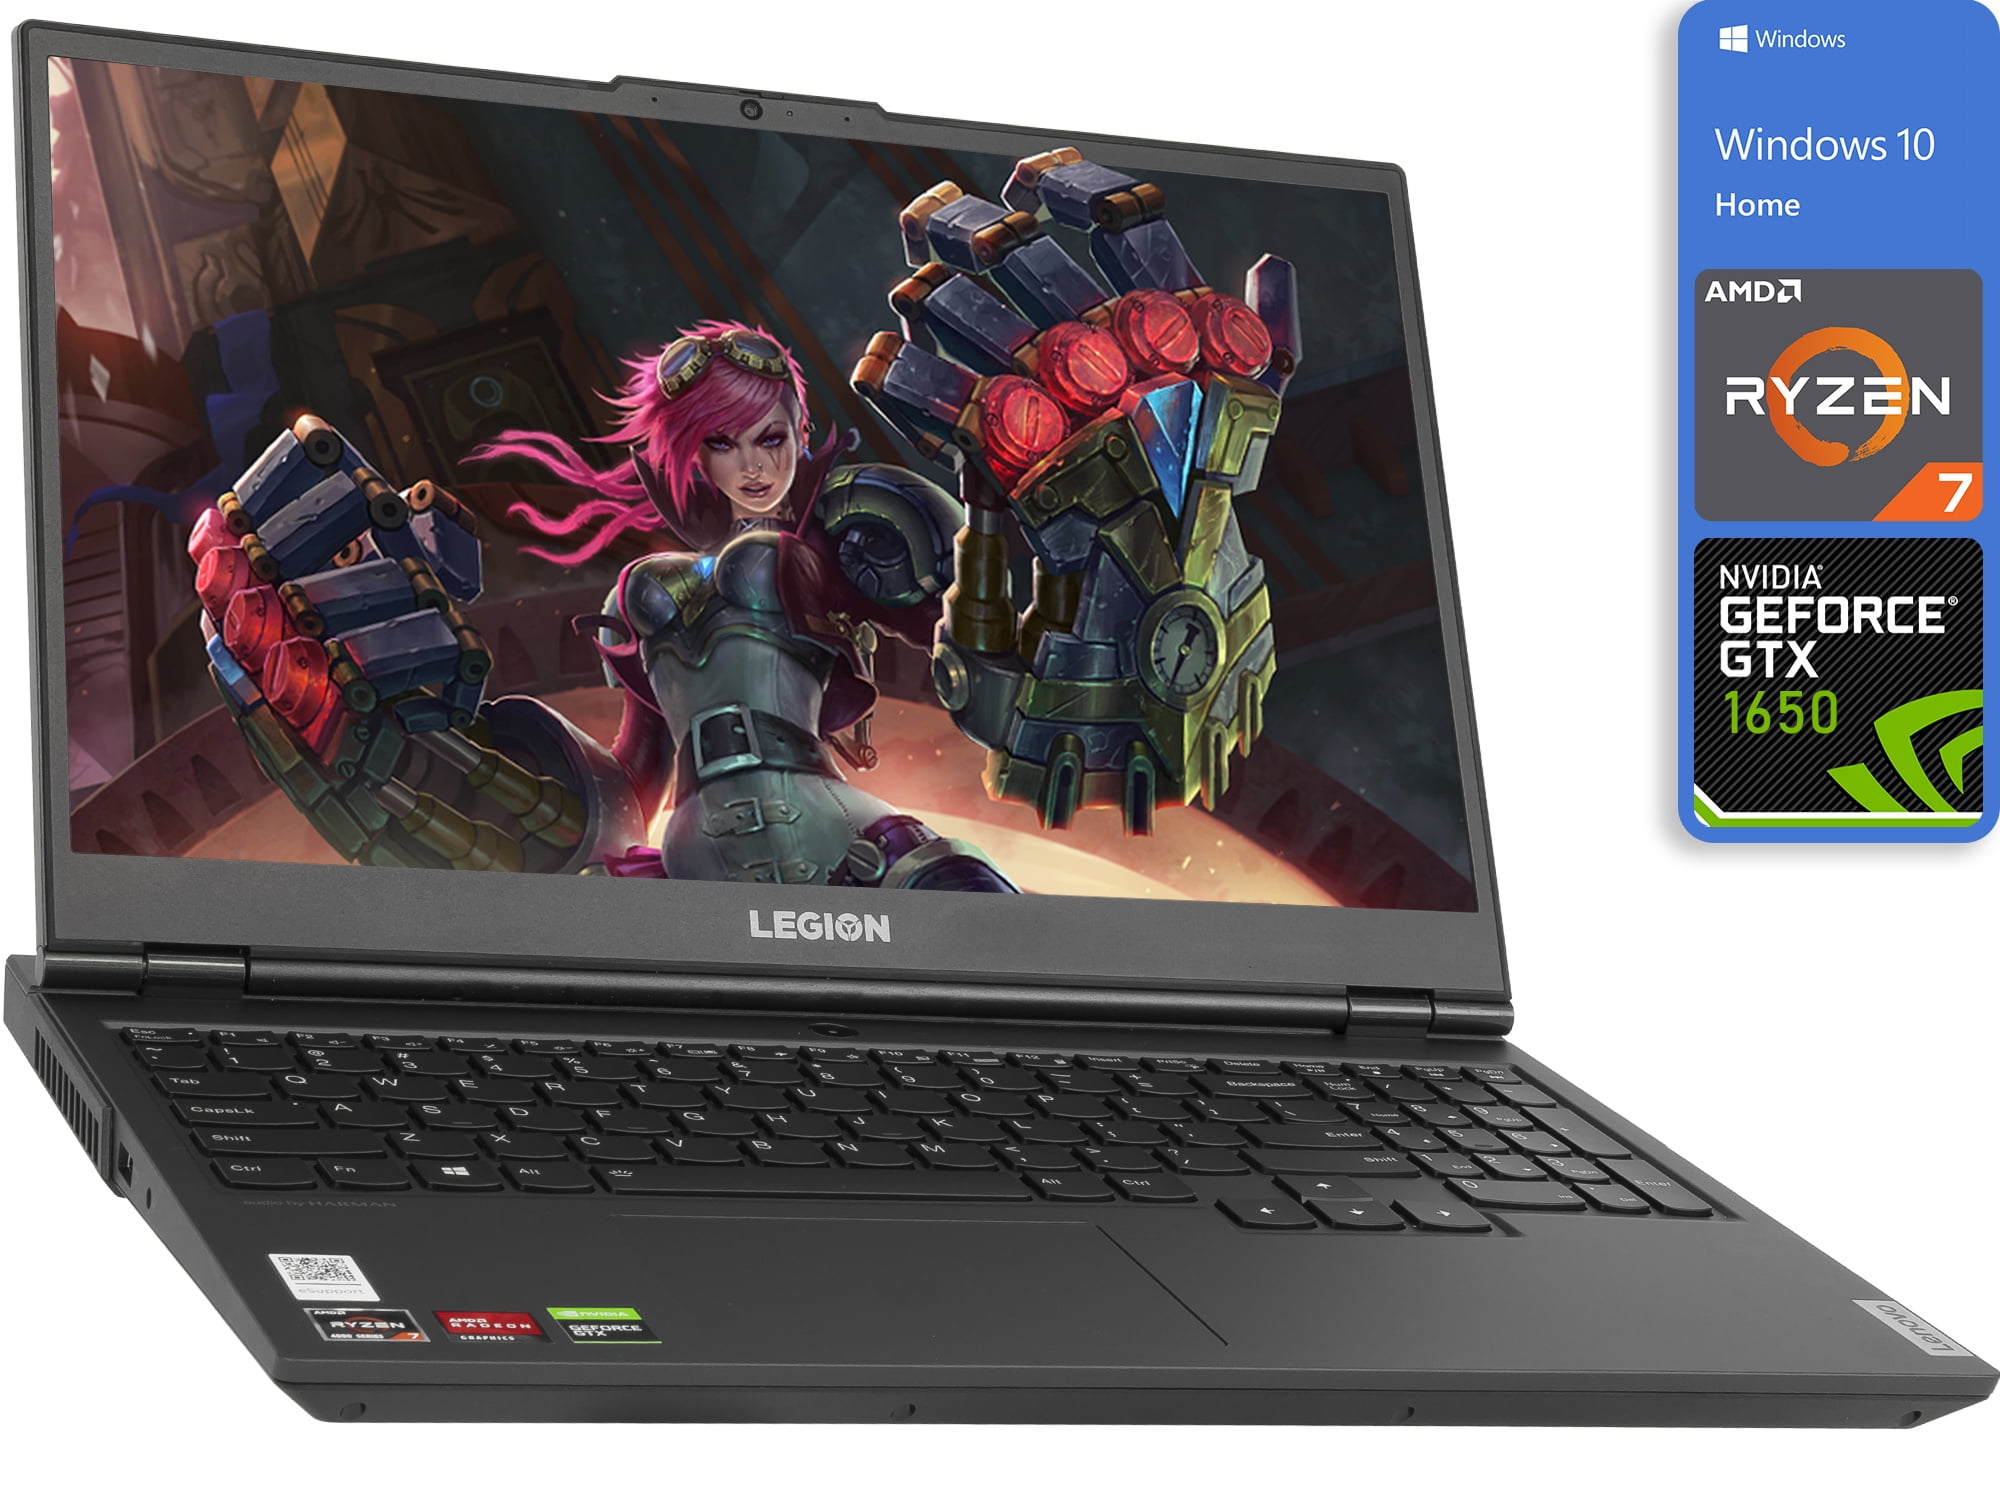 AMD Ryzen 7-4800H Octa-core Lenovo Legion 5 15.6 Gaming Laptop 120Hz AMD Ryzen 7-4800H 8GB RAM 512GB SSD GTX 1650 4GB 120Hz Refresh Rate NVIDIA GeForce GTX 1650 4GB GDDR6 Legion Ultimate 